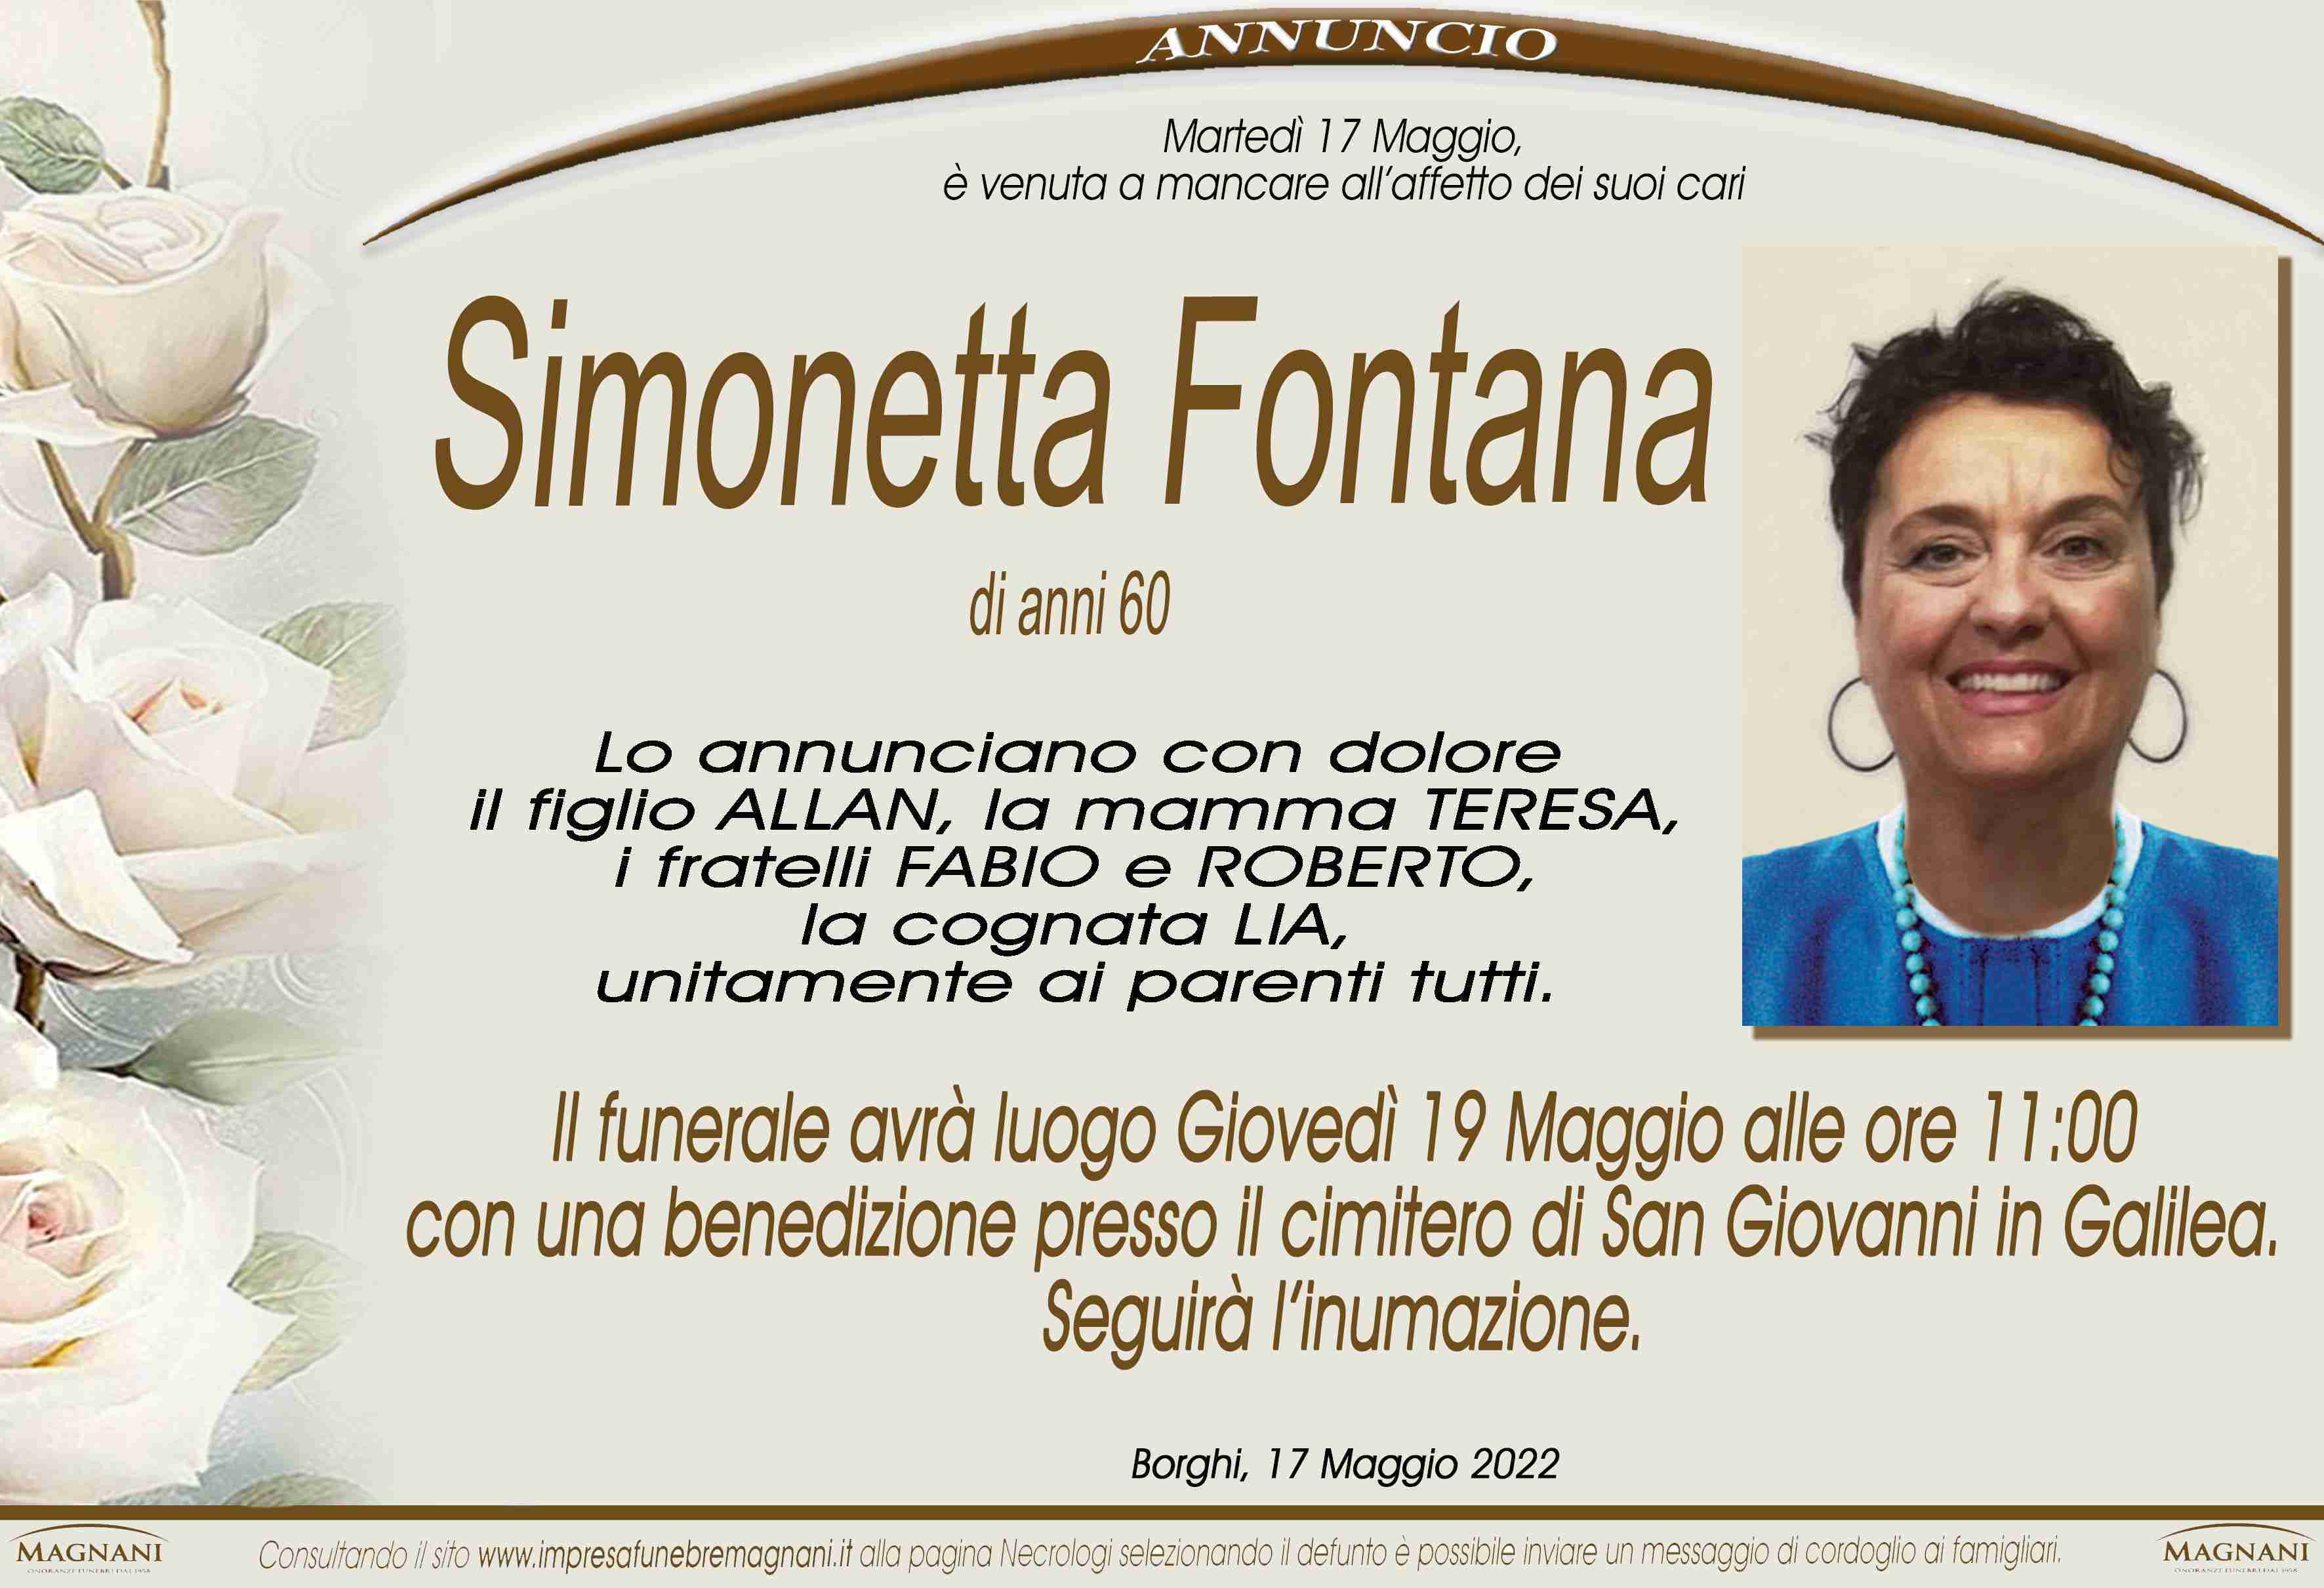 Simonetta Fontana